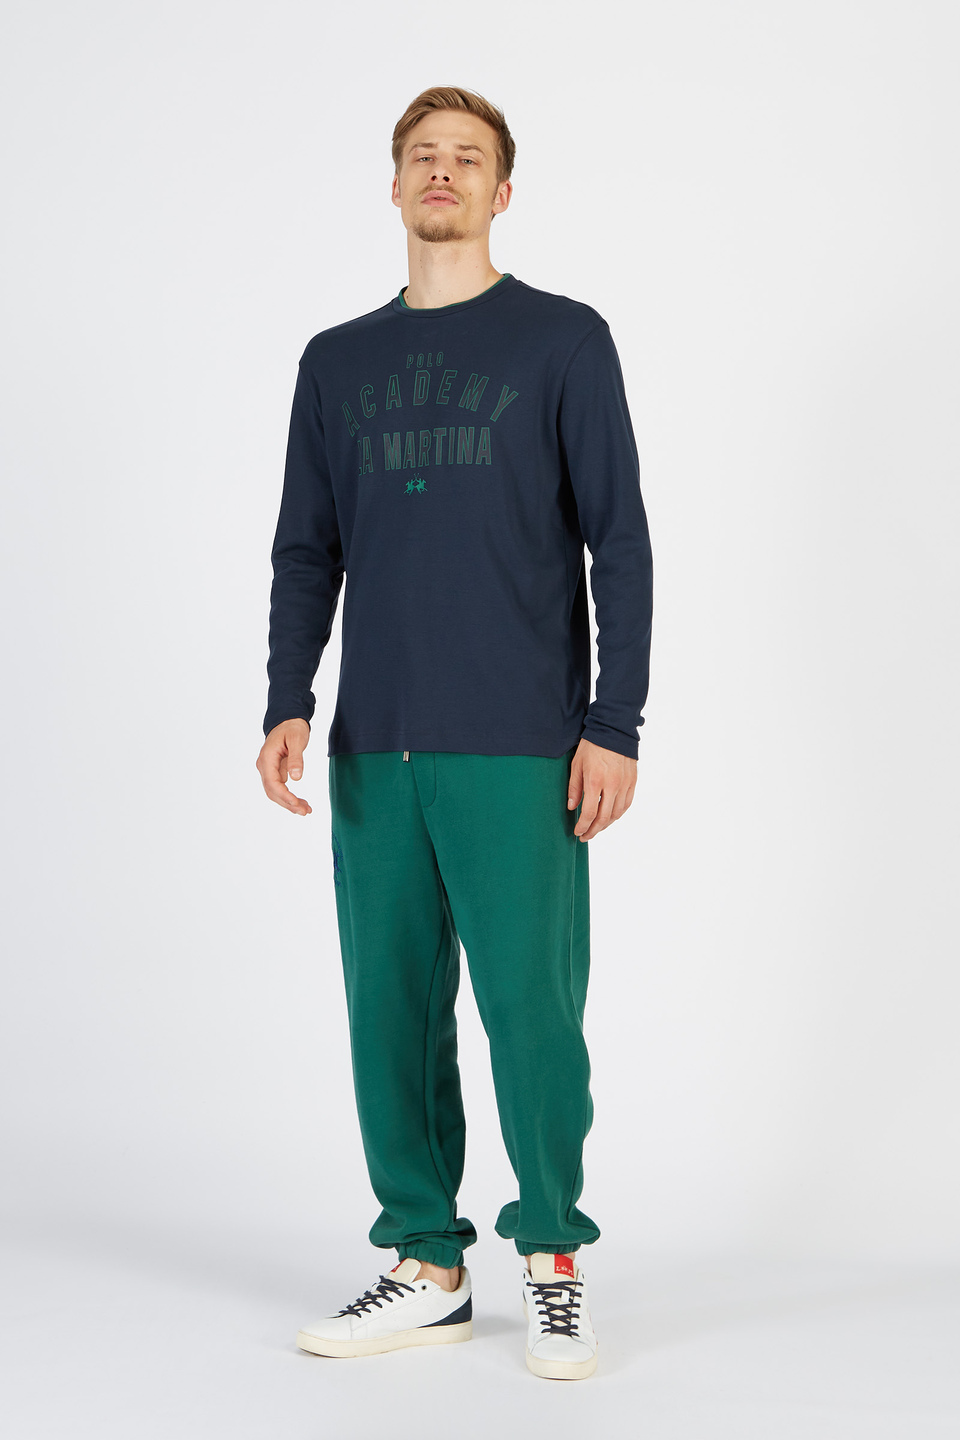 Langarm Herren T-Shirt Rundhals regular fit | La Martina - Official Online Shop